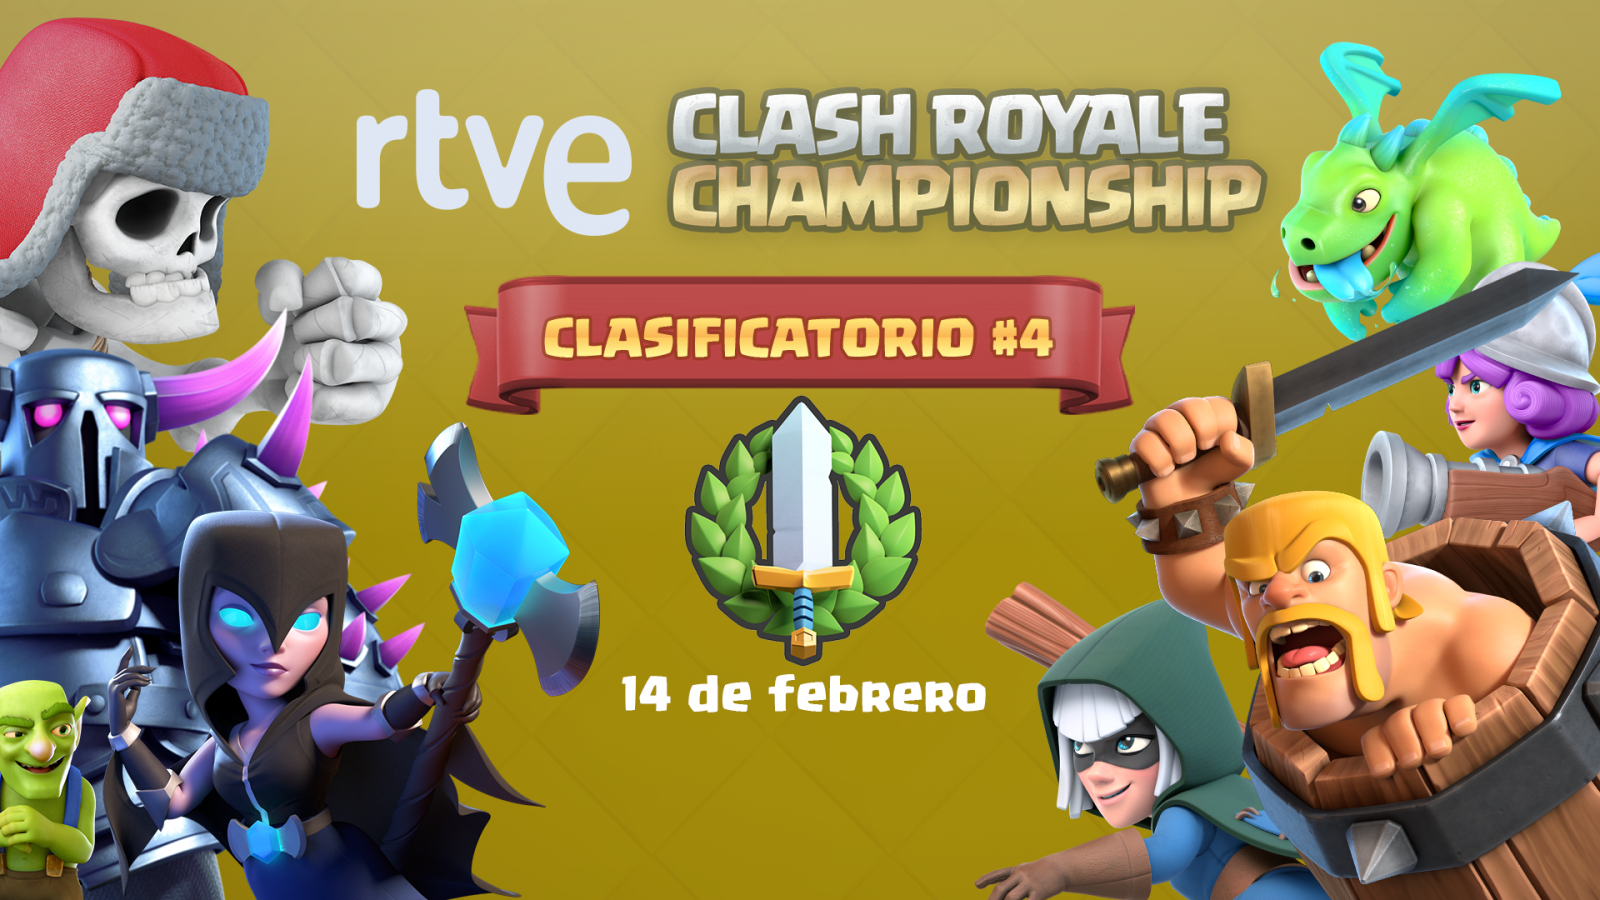 RTVE Clash Royale Championship celebra su último clasificatorio